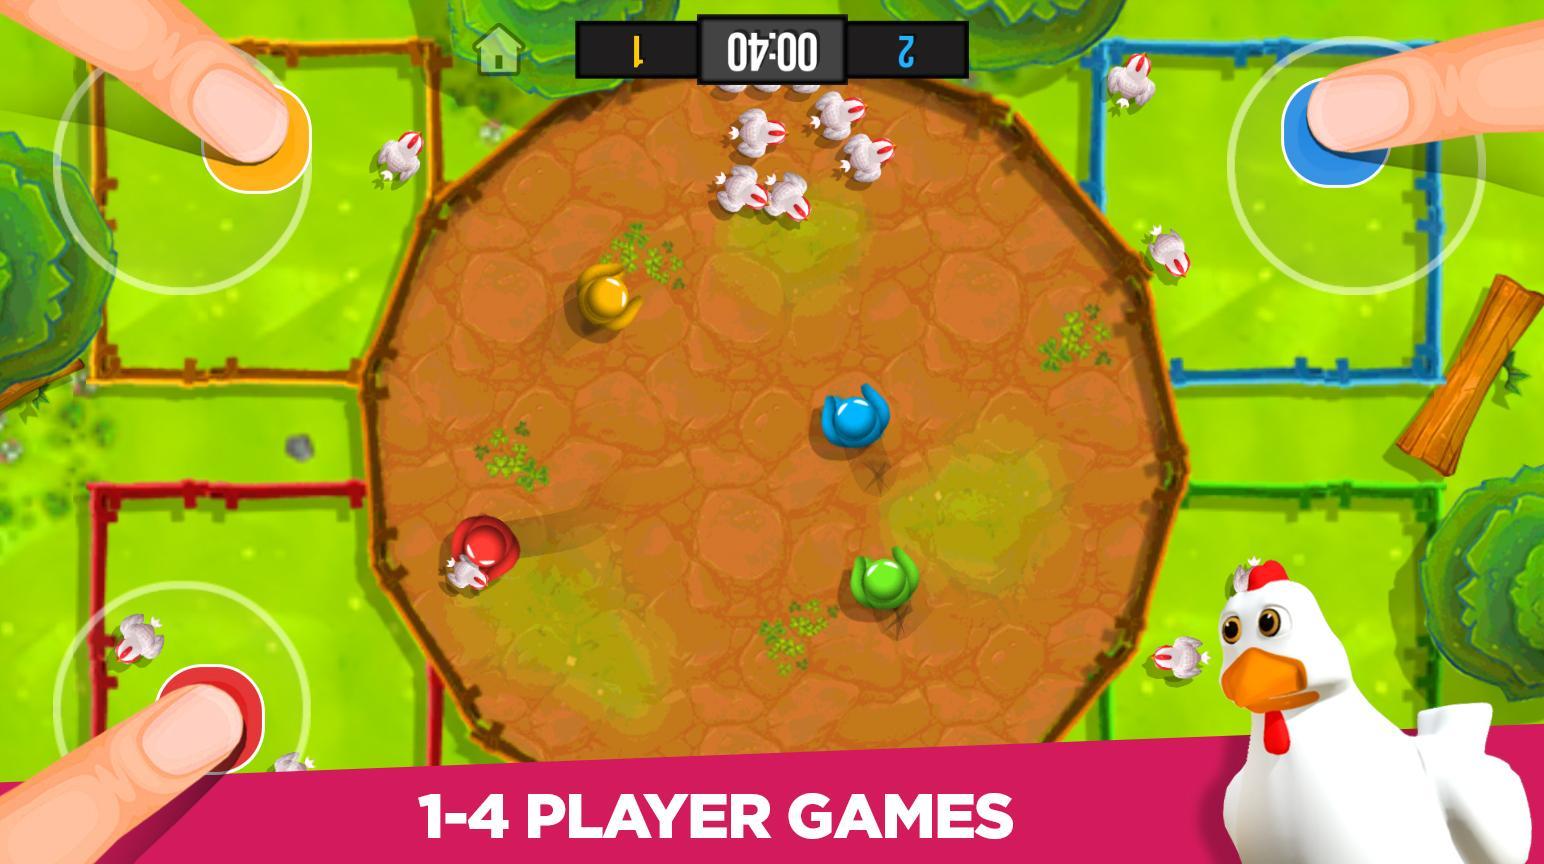 Stickman Party 1 2 3 4 Player Games Free 1.9.6.2 Screenshot 10